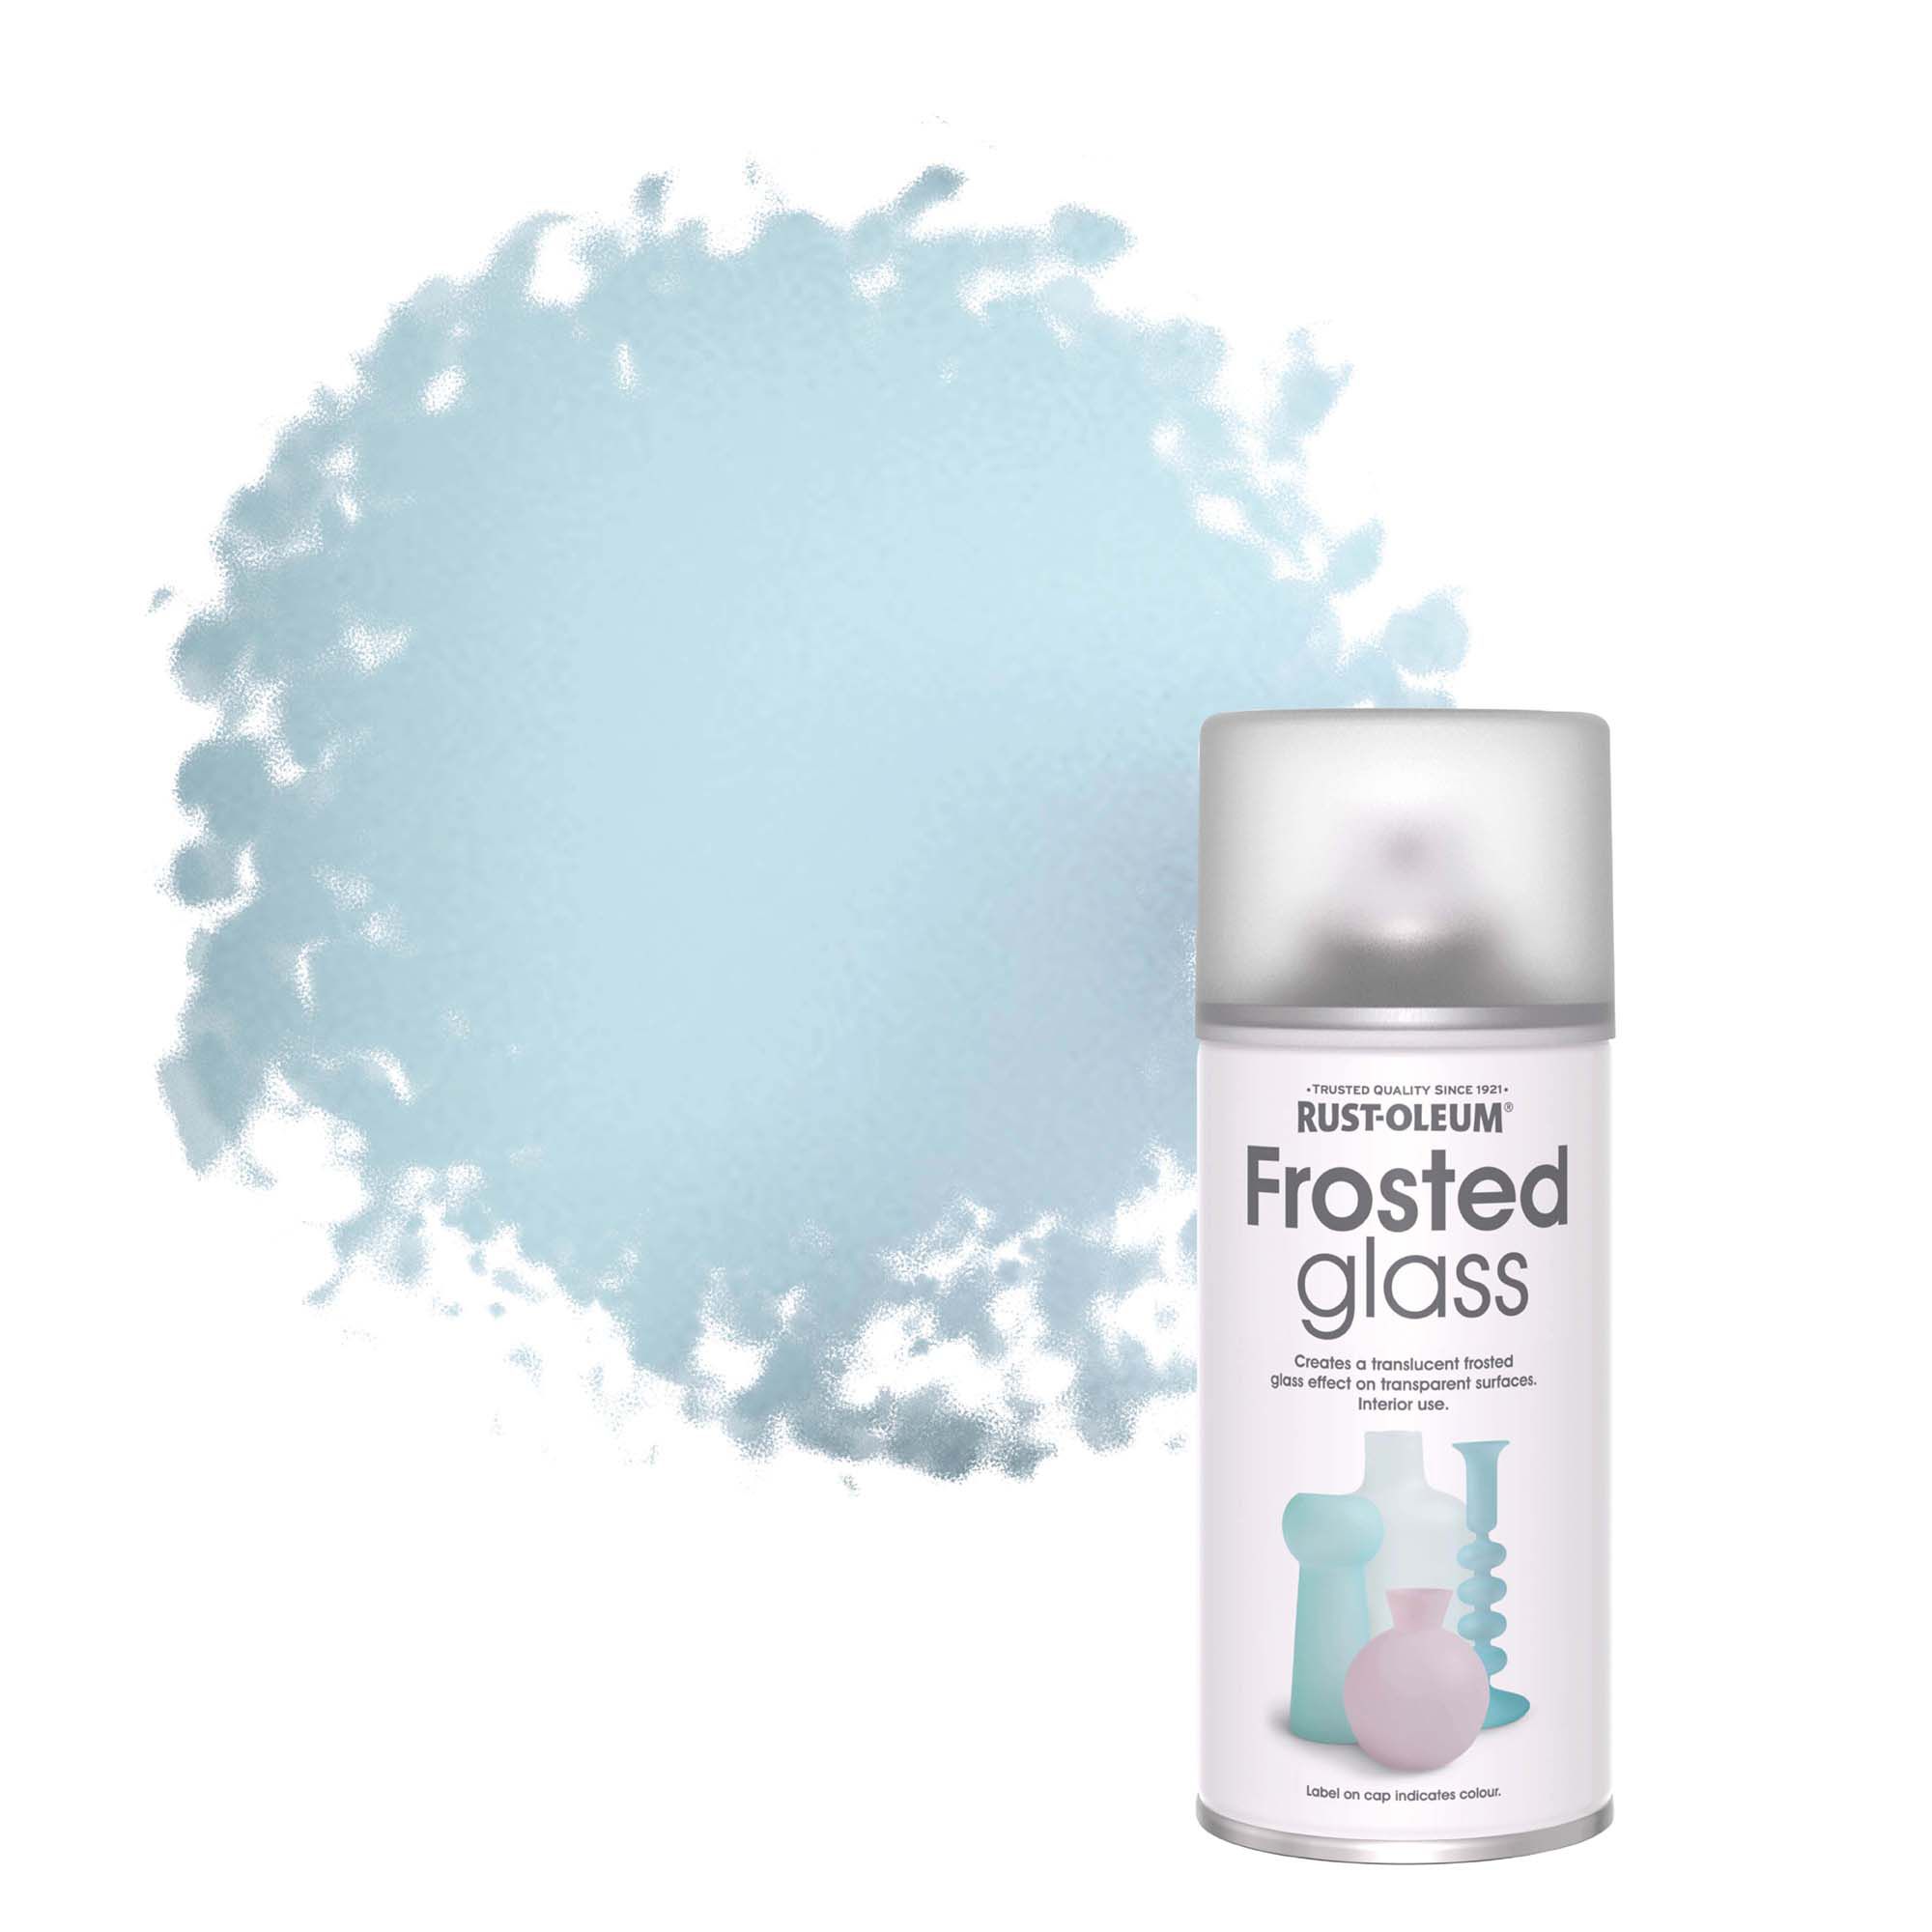 Rust-Oleum Frosted Glass Ocean Matt Frosted glass effect Topcoat Spray paint, 150ml